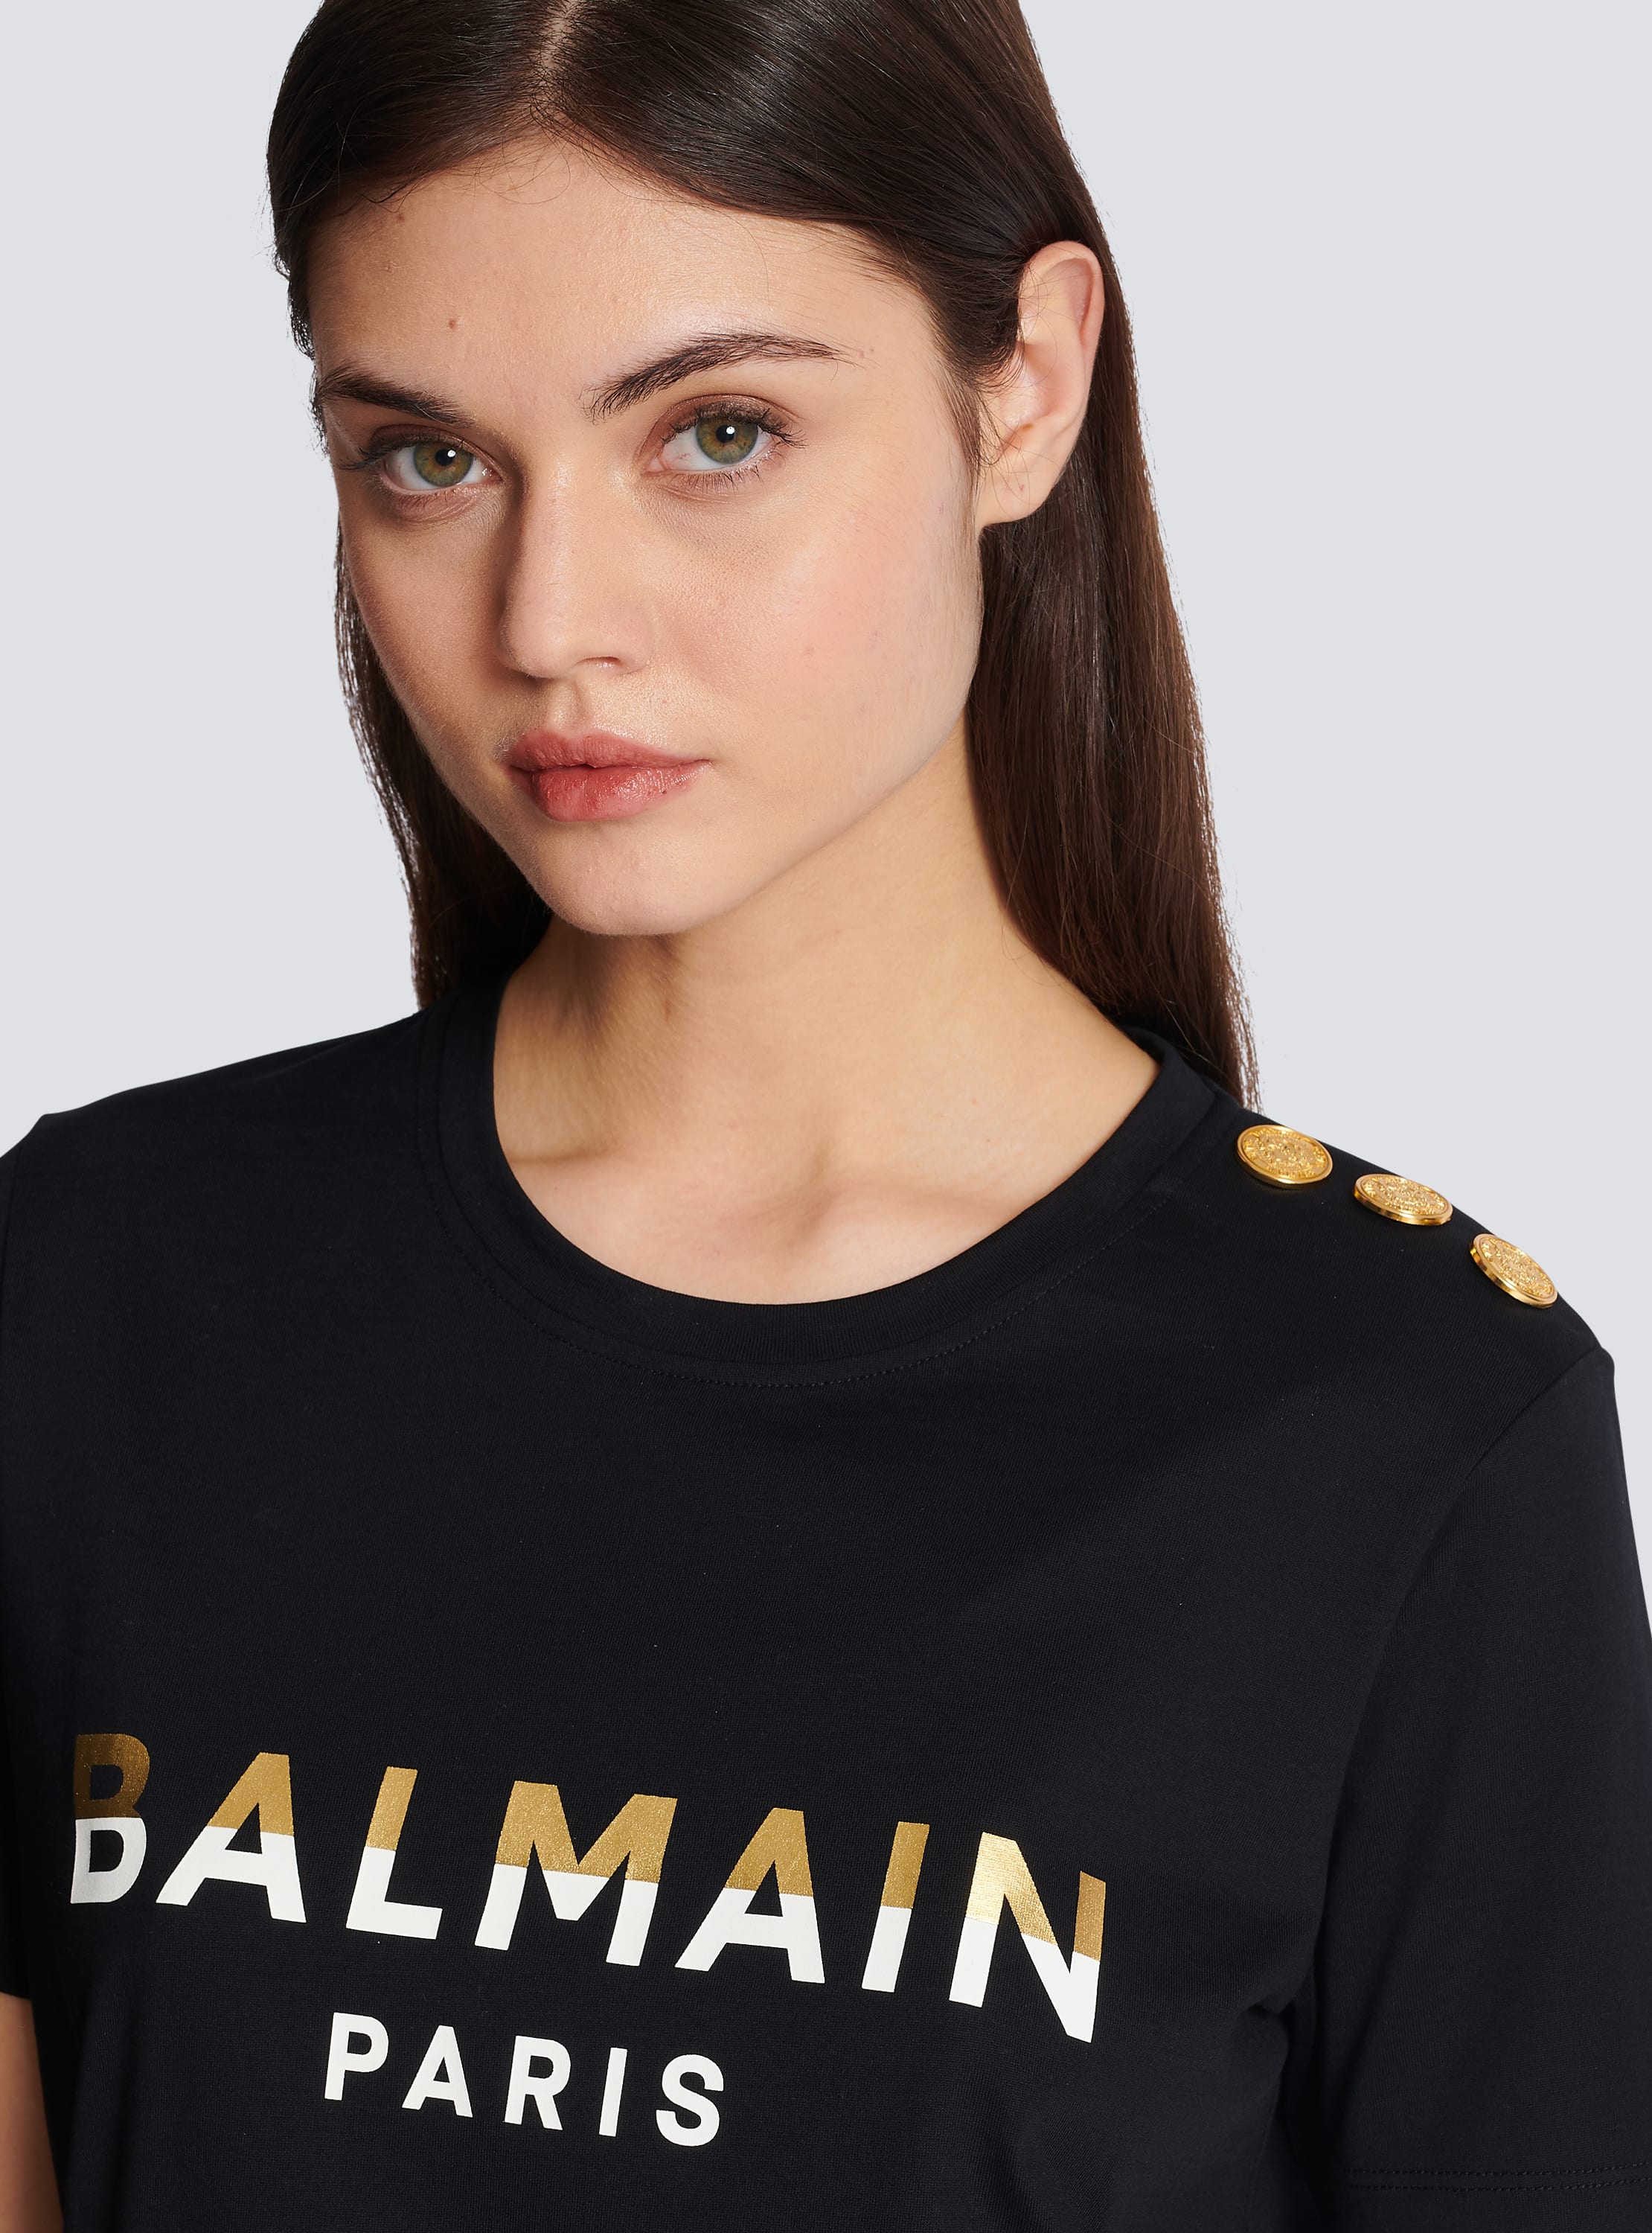 Balmain Paris T-shirt with buttons black - Women | BALMAIN